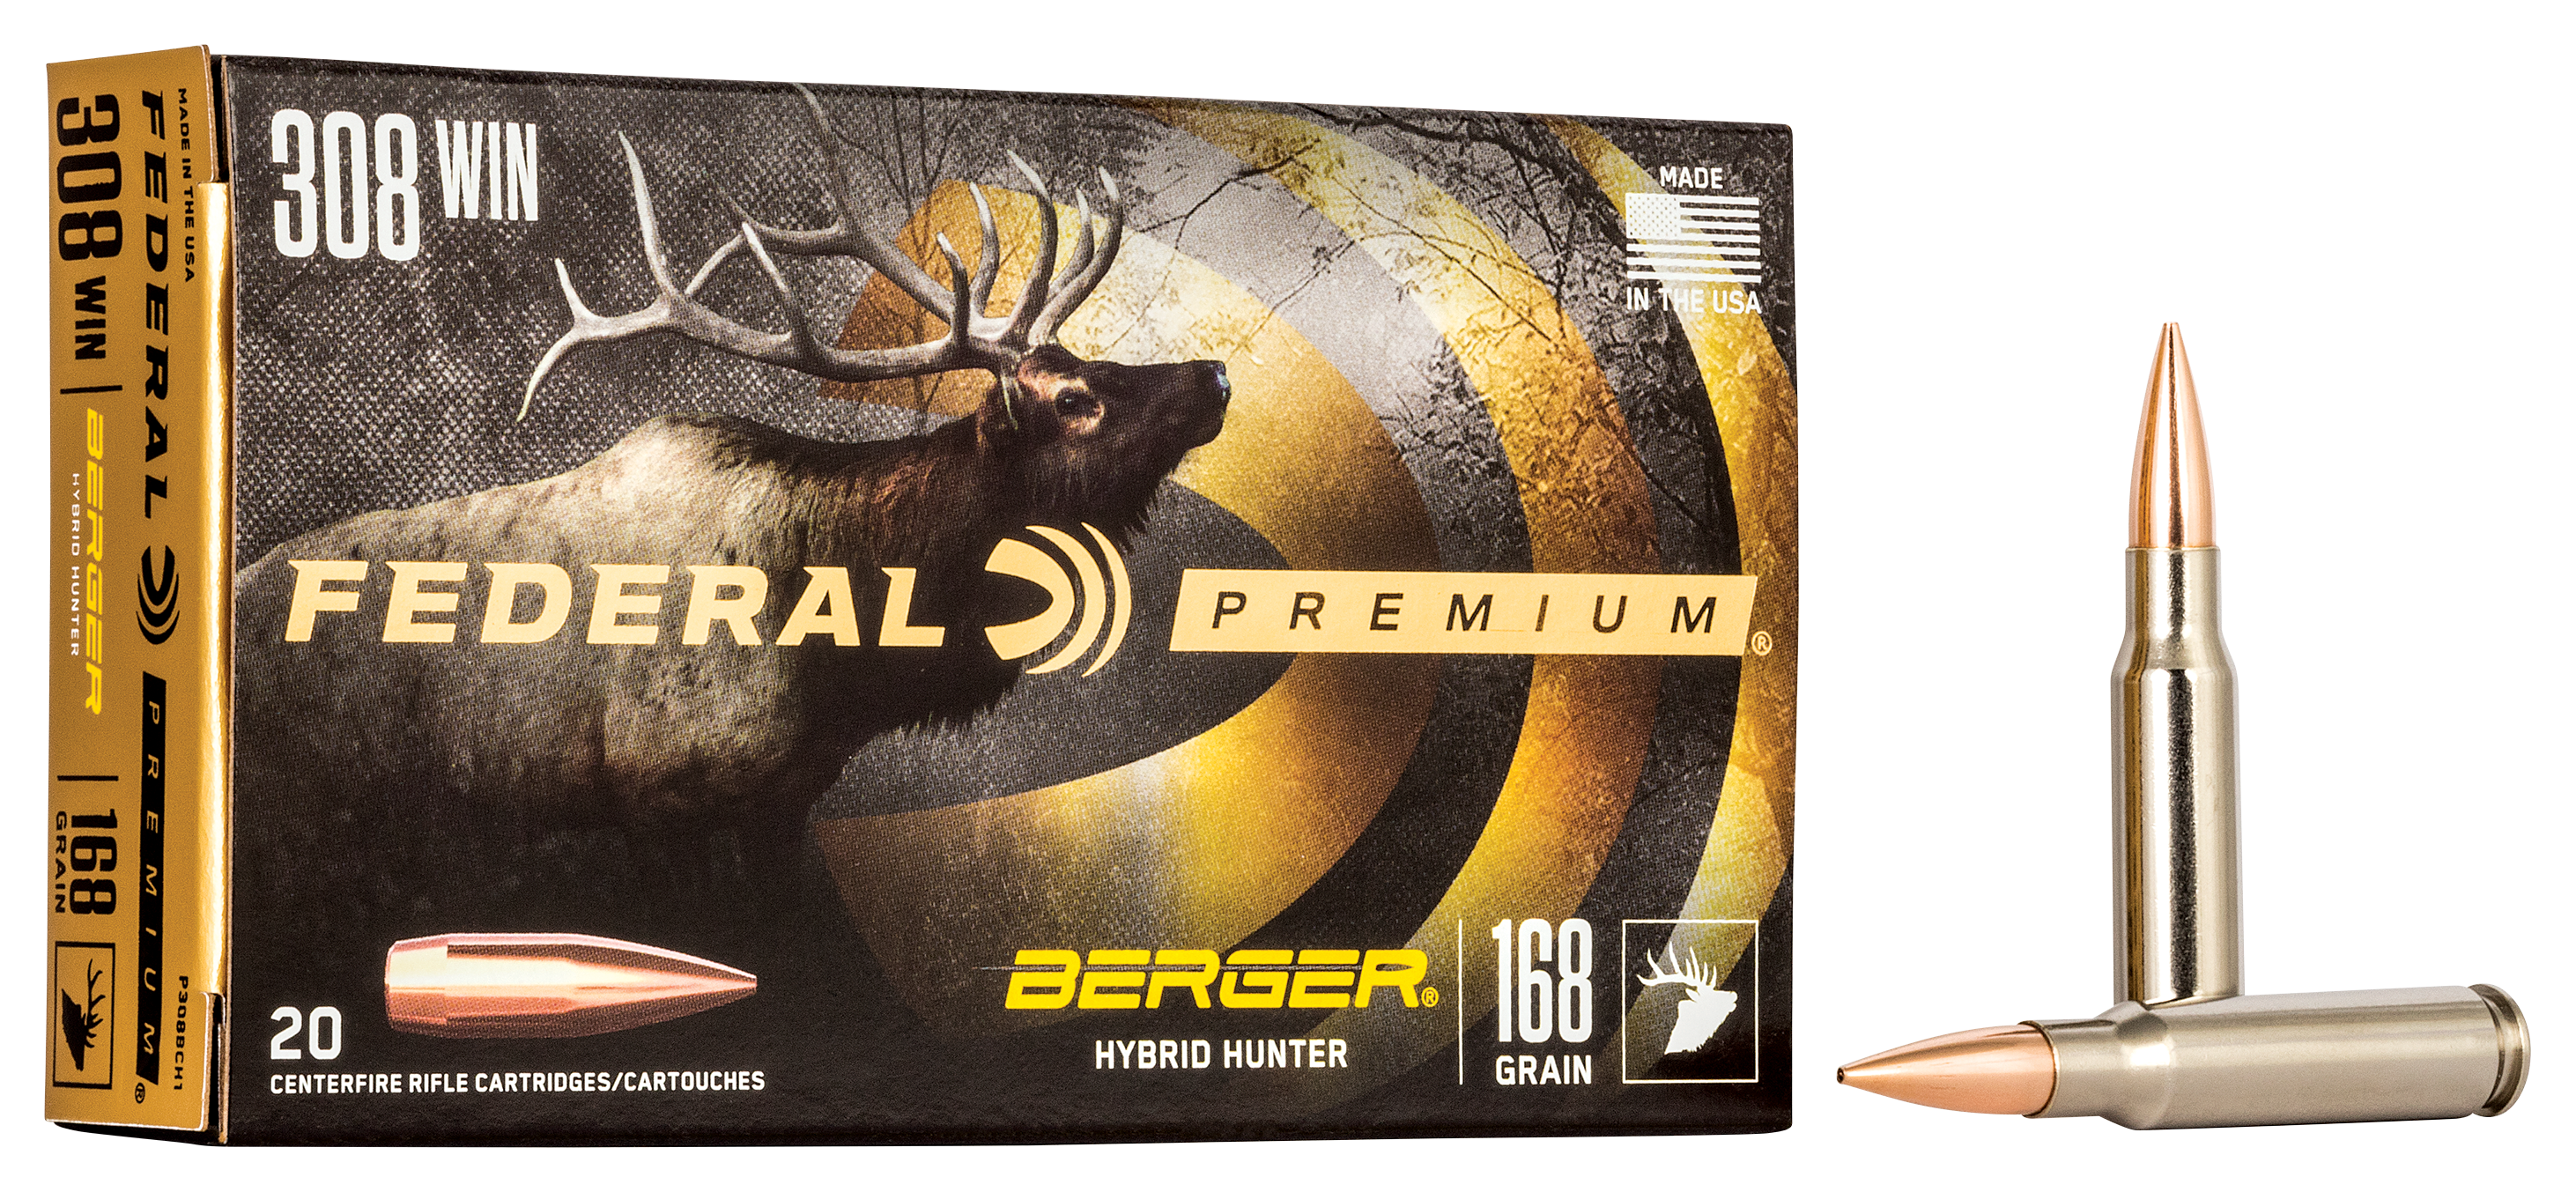 Federal Premium Berger Hybrid Hunter .308 Winchester 168 Grain